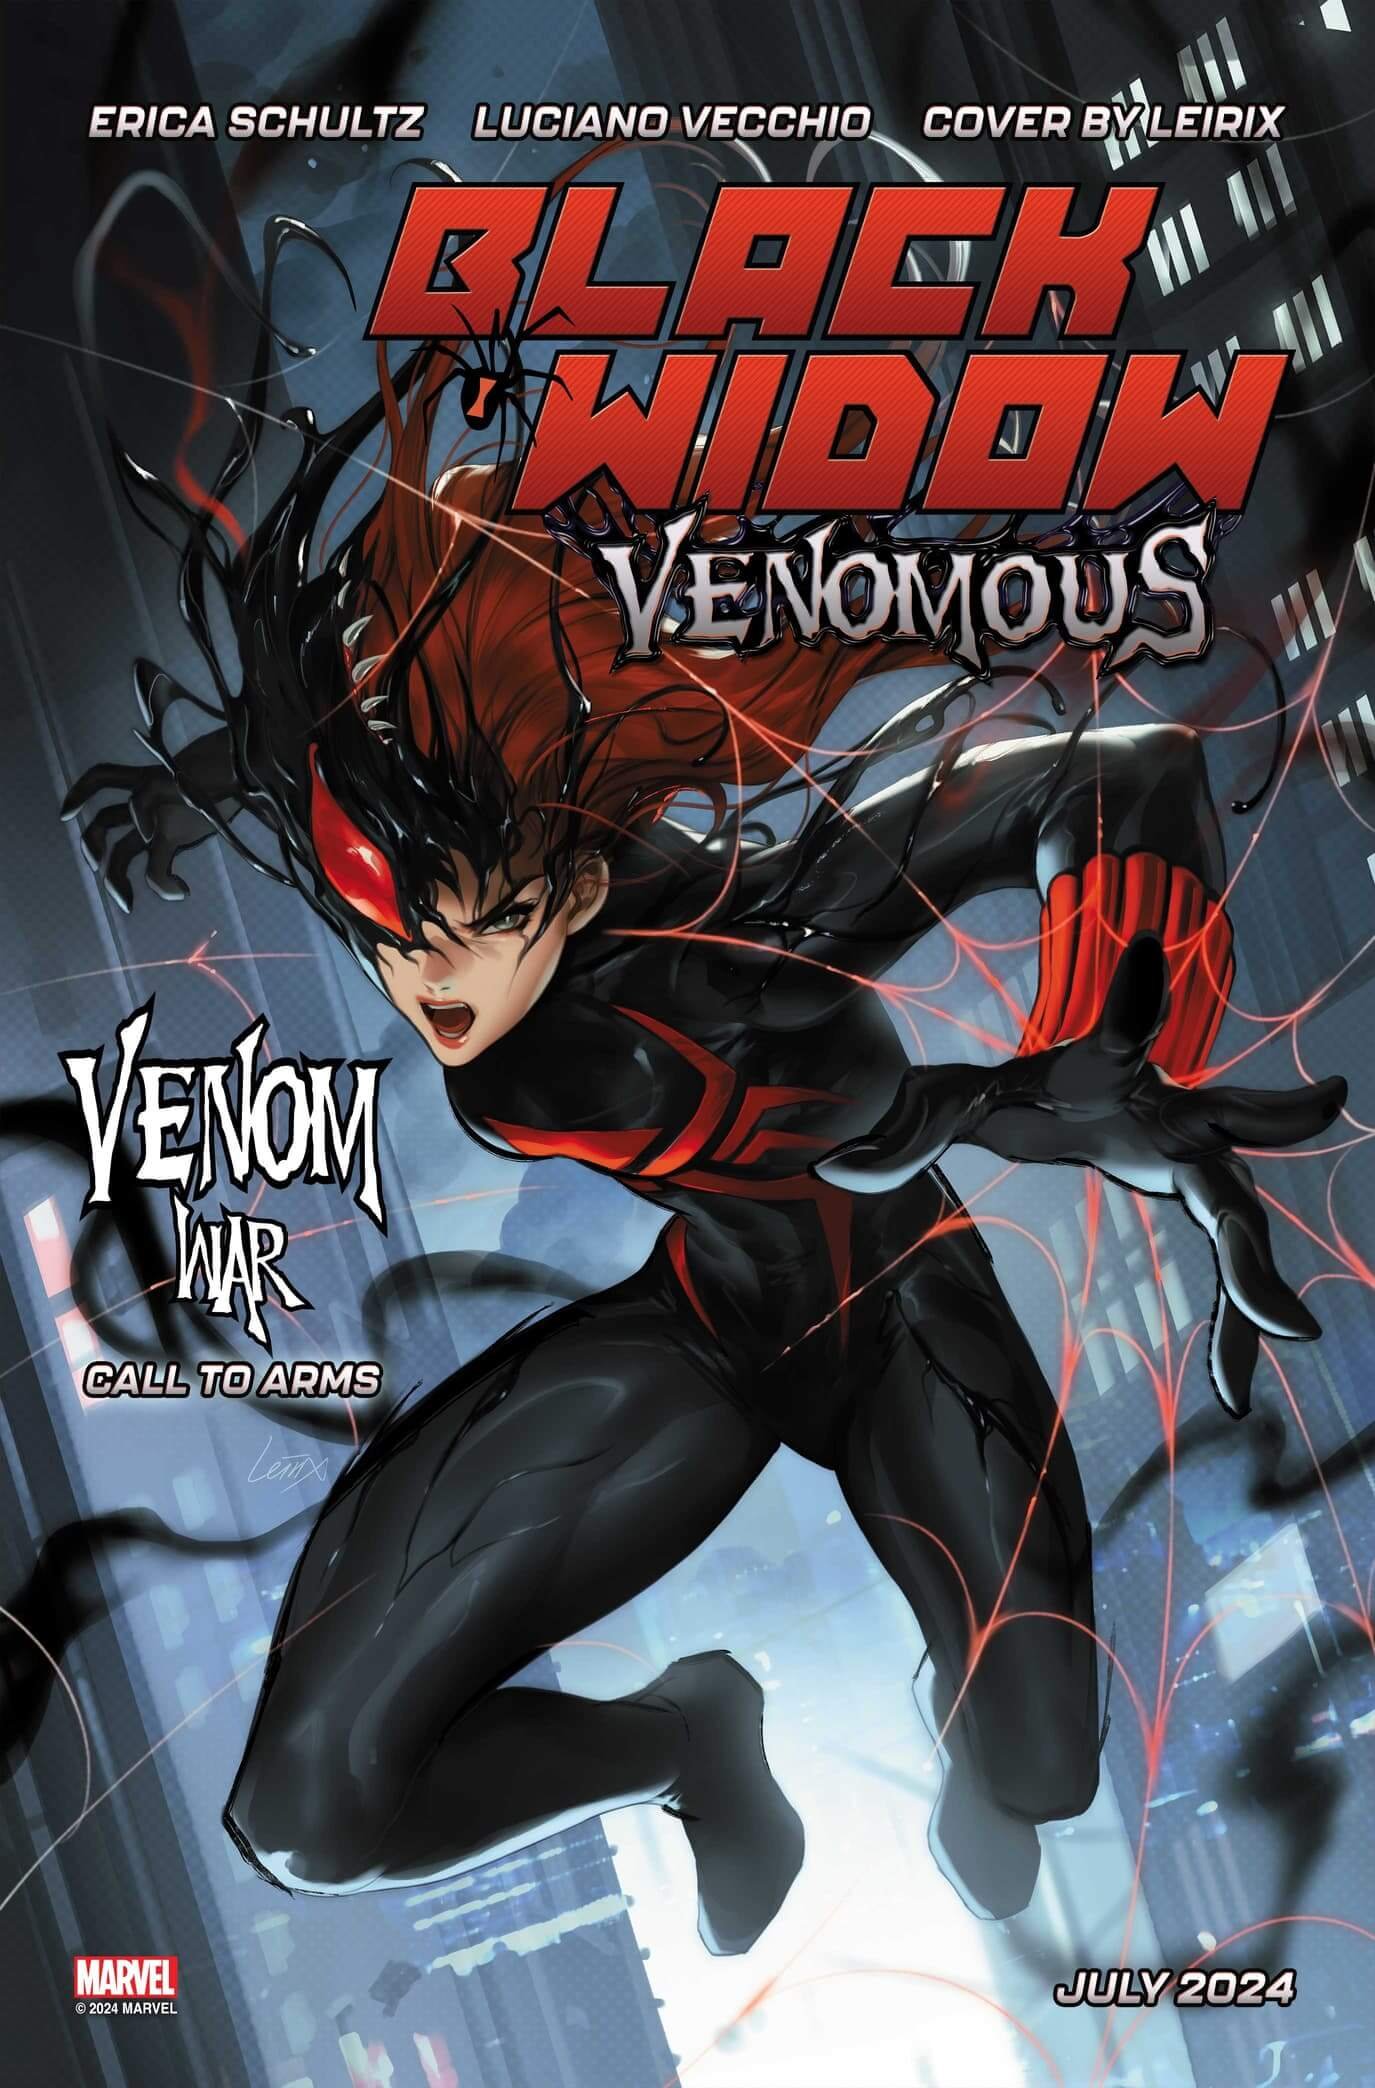 Cover di Black Widow: Venomous di Leirix